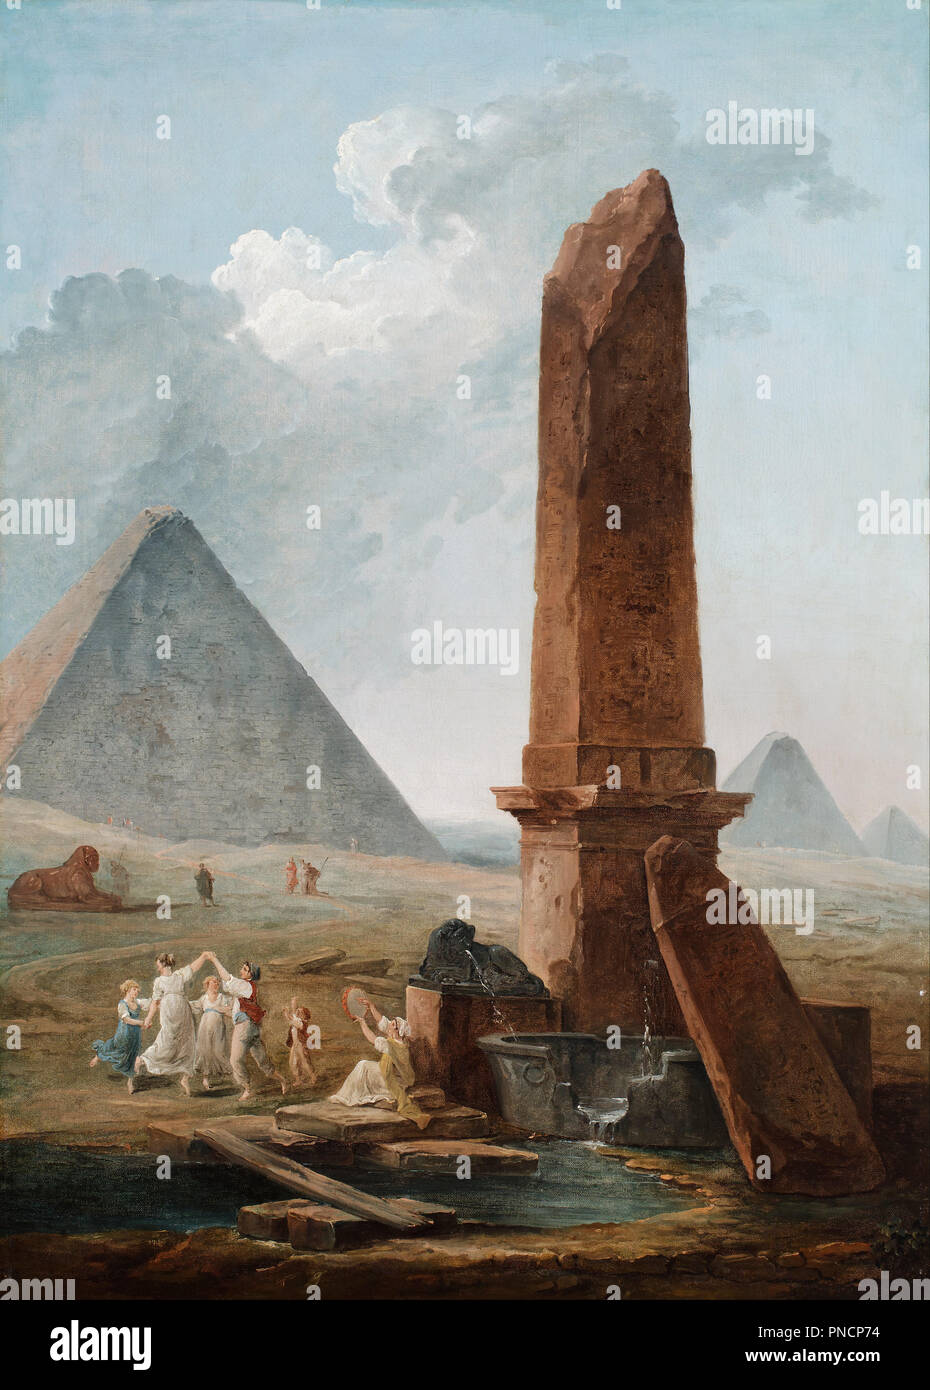 The Farandole Amidst Egyptian Monuments. Date/Period: 1733/1808. Painting. Author: Hubert Robert. ROBERT, HUBERT. Stock Photo